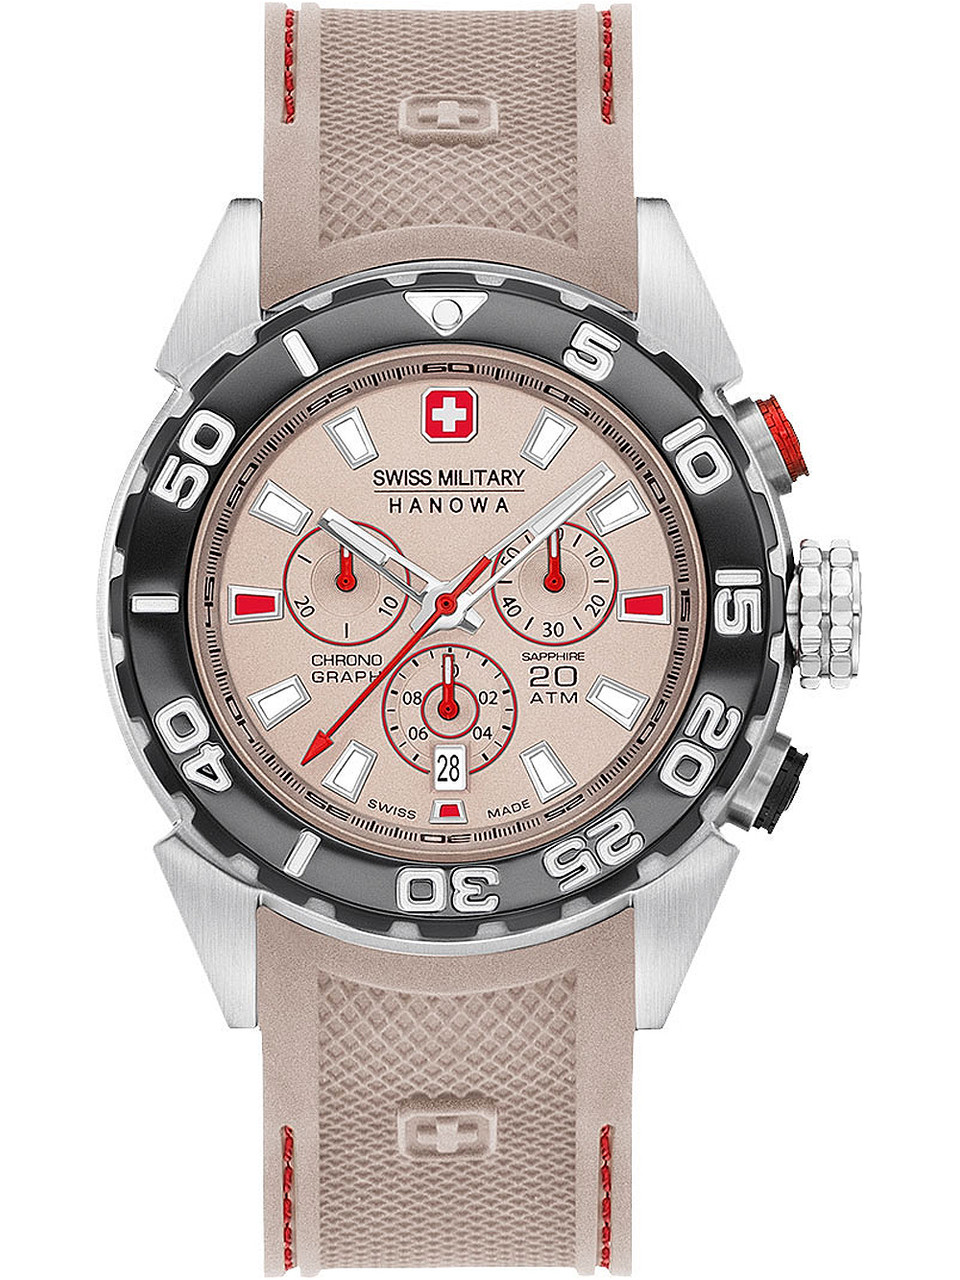 Swiss Military Hanowa 06-4324-04-014 Scuba | Diver 20ATM chrono Genuine owlica Watches - 45mm